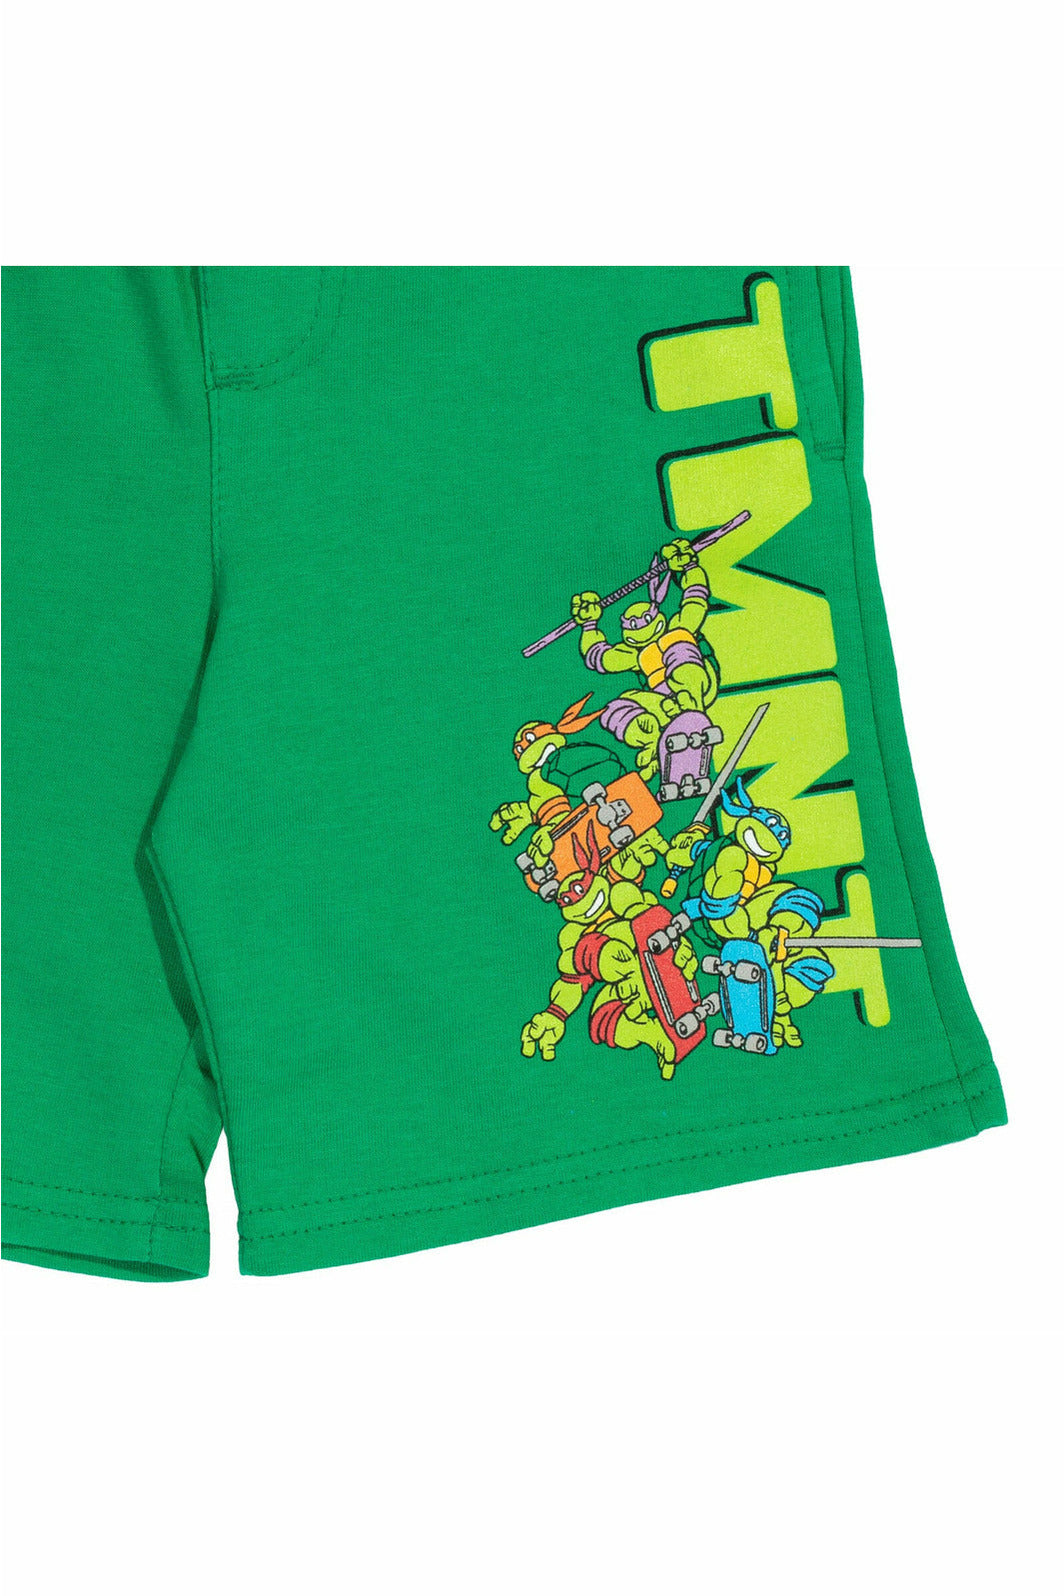 Teenage Mutant Ninja Turtles French Terry 2 Pack Shorts